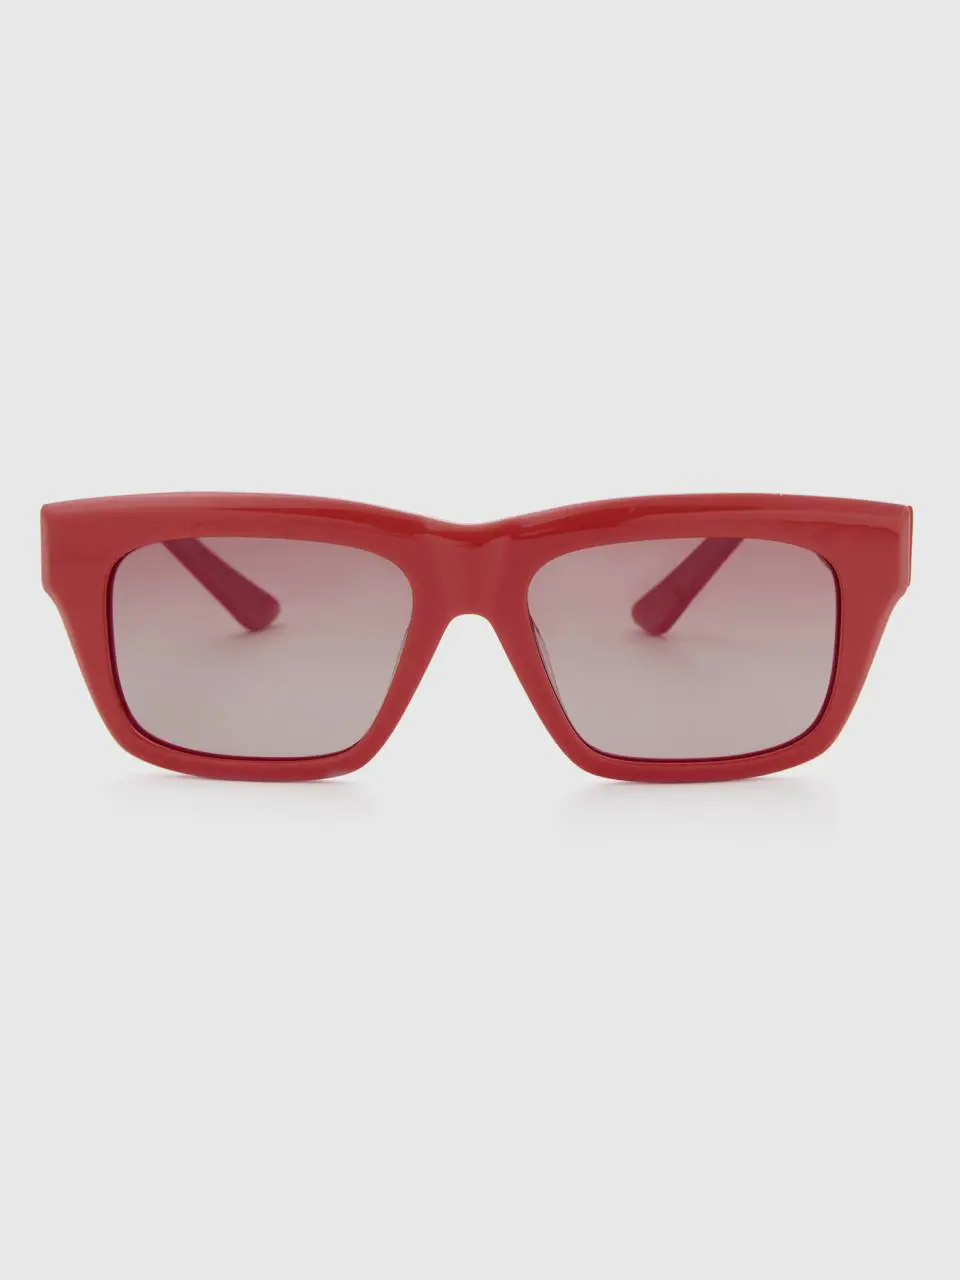 Benetton red rectangular sunglasses. 1